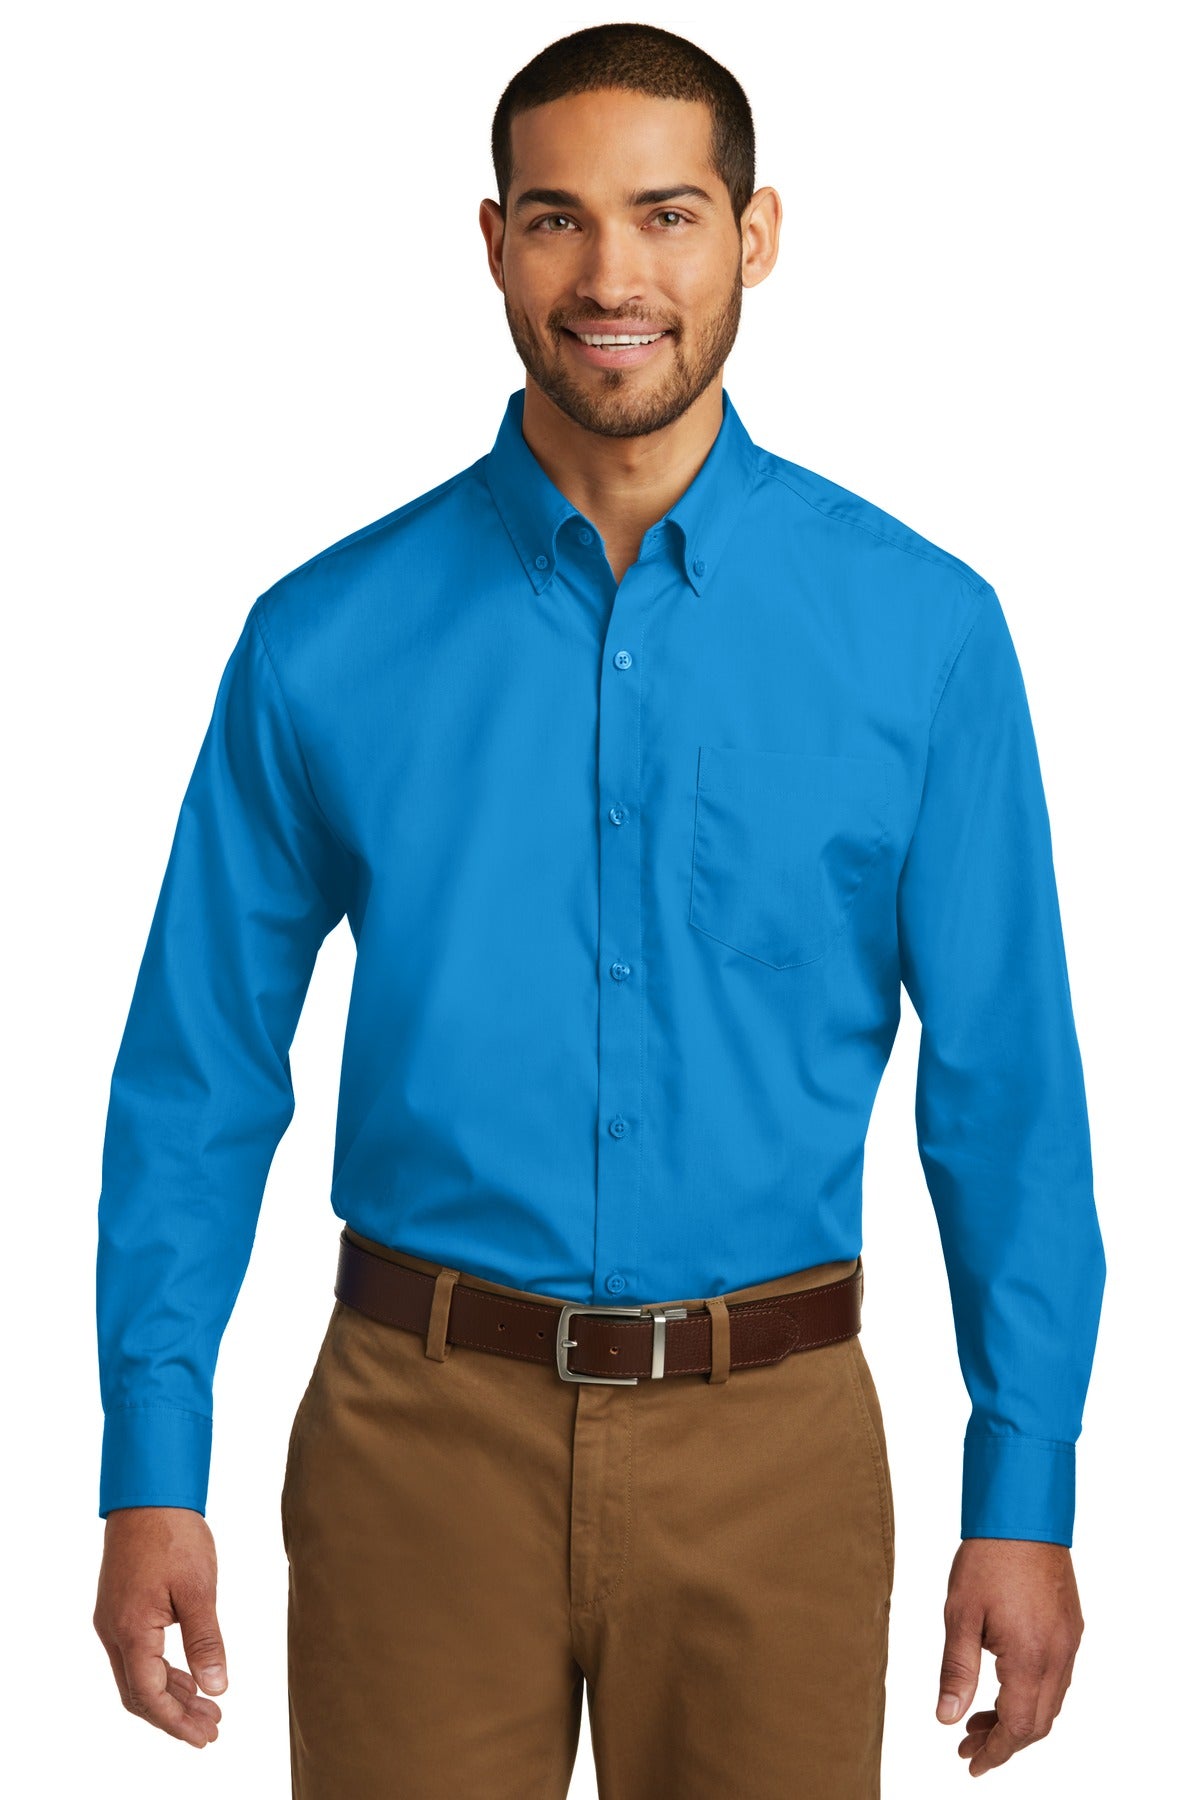 Port Authority® Long Sleeve Carefree Poplin Shirt. W100 [Coastal Blue] - DFW Impression